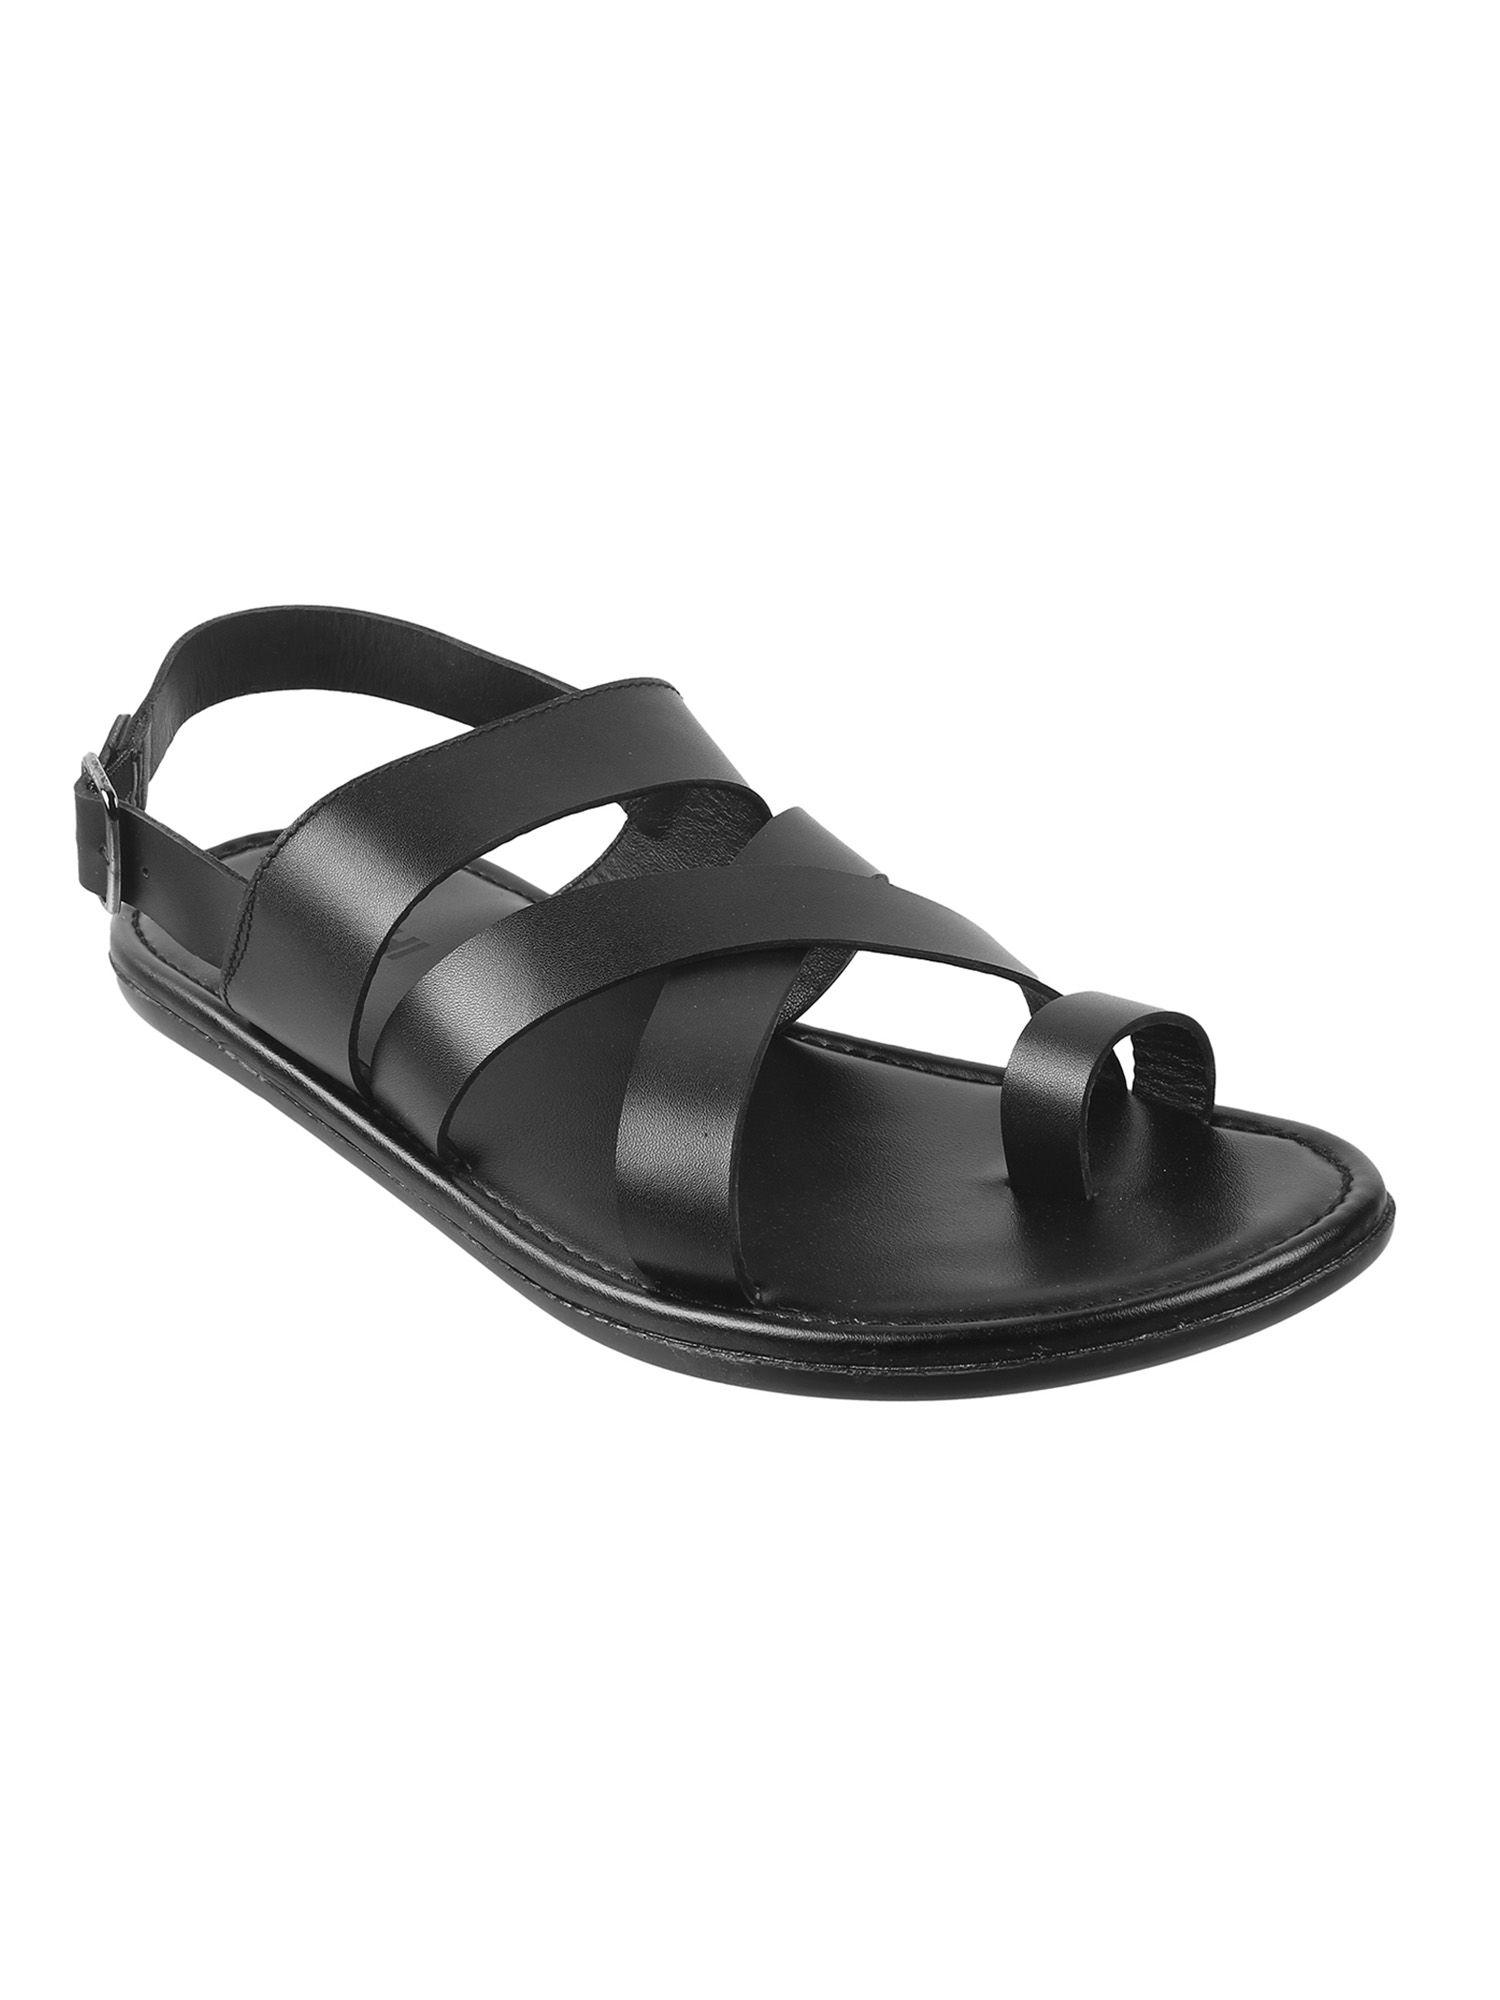 men's black sandals